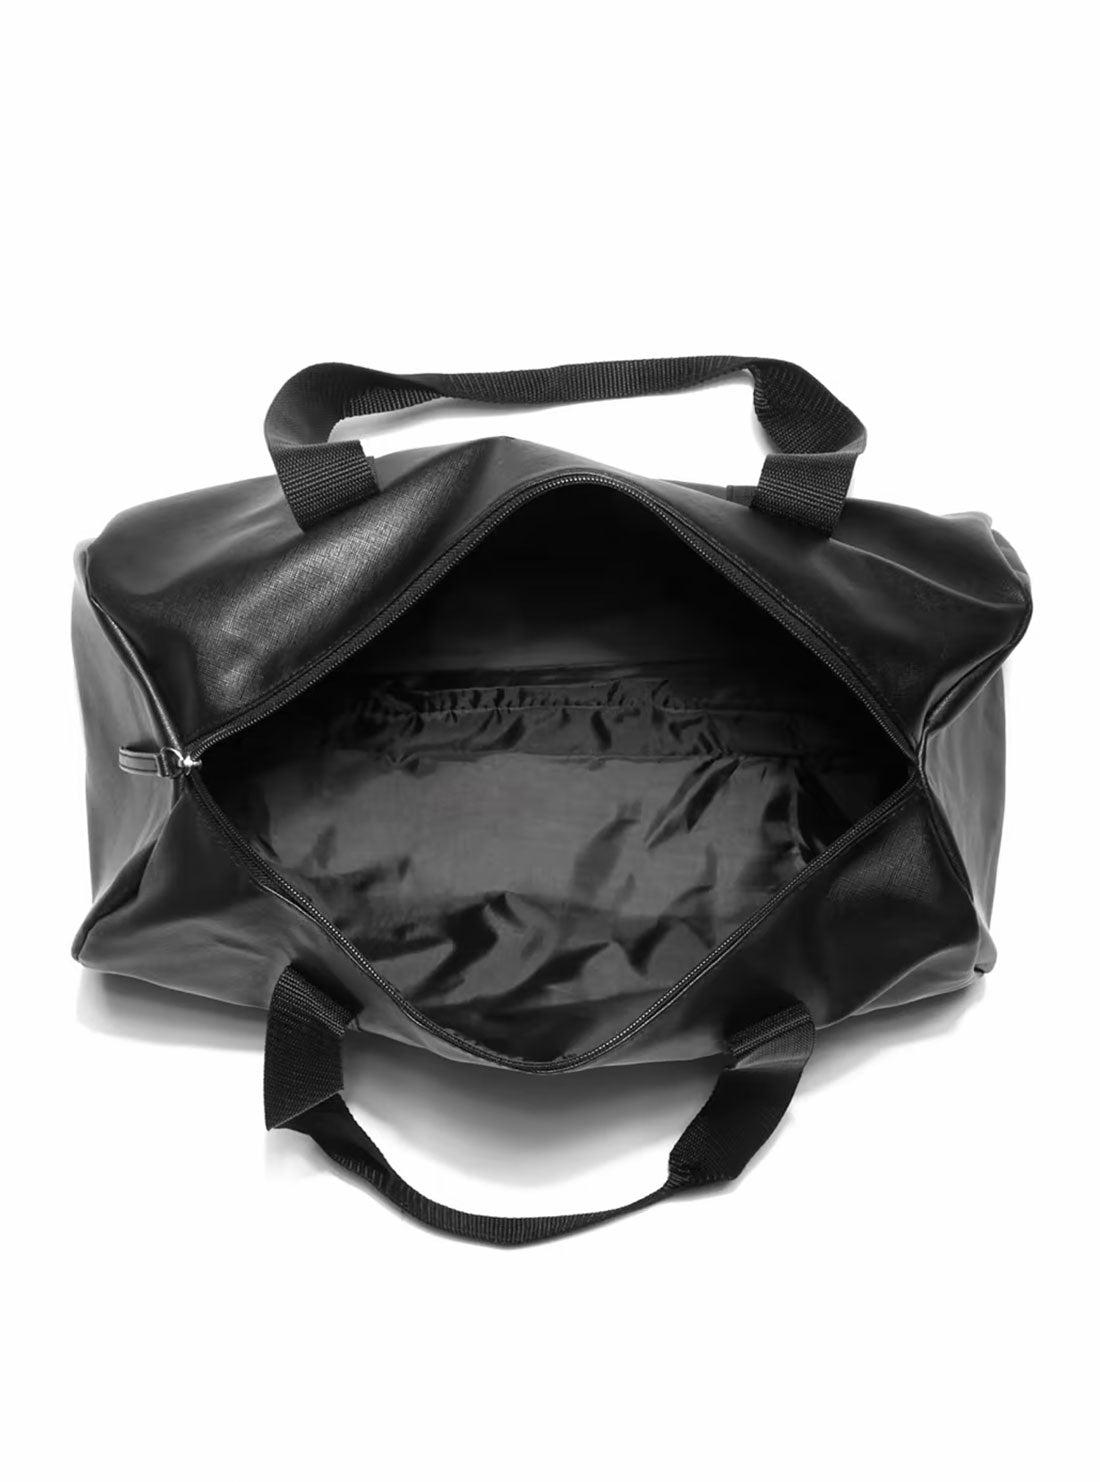 Black UOMO Duffle Bag